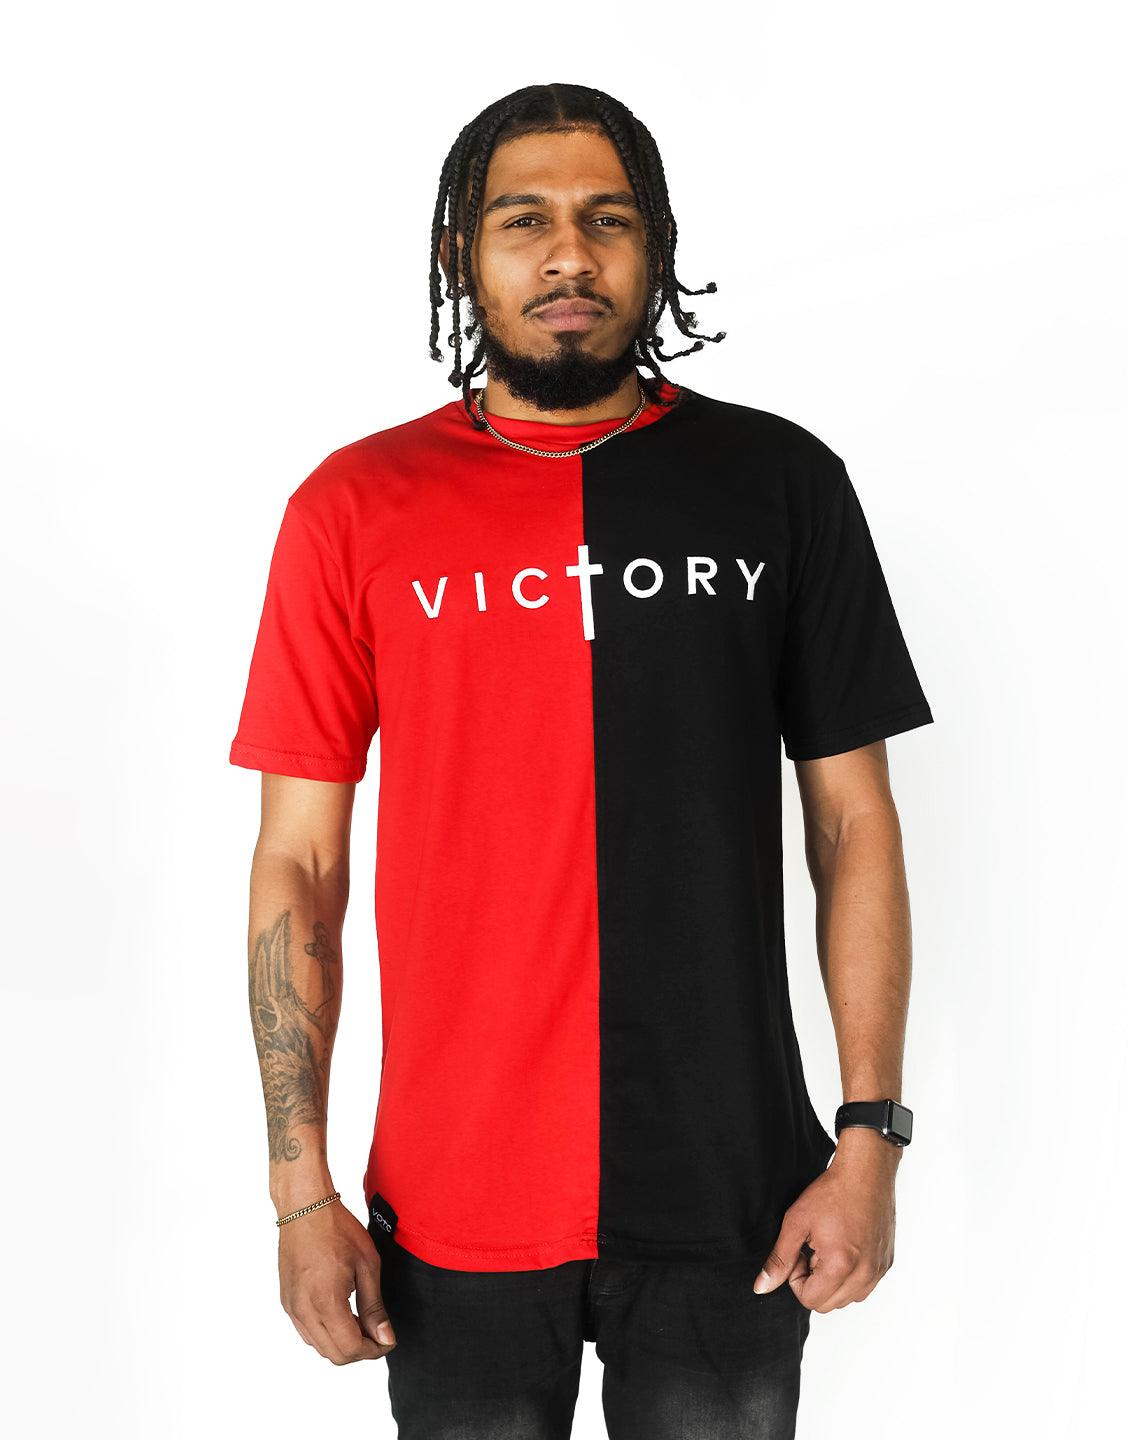 Victory - Split Tee (Red/Black) - VOTC Clothing